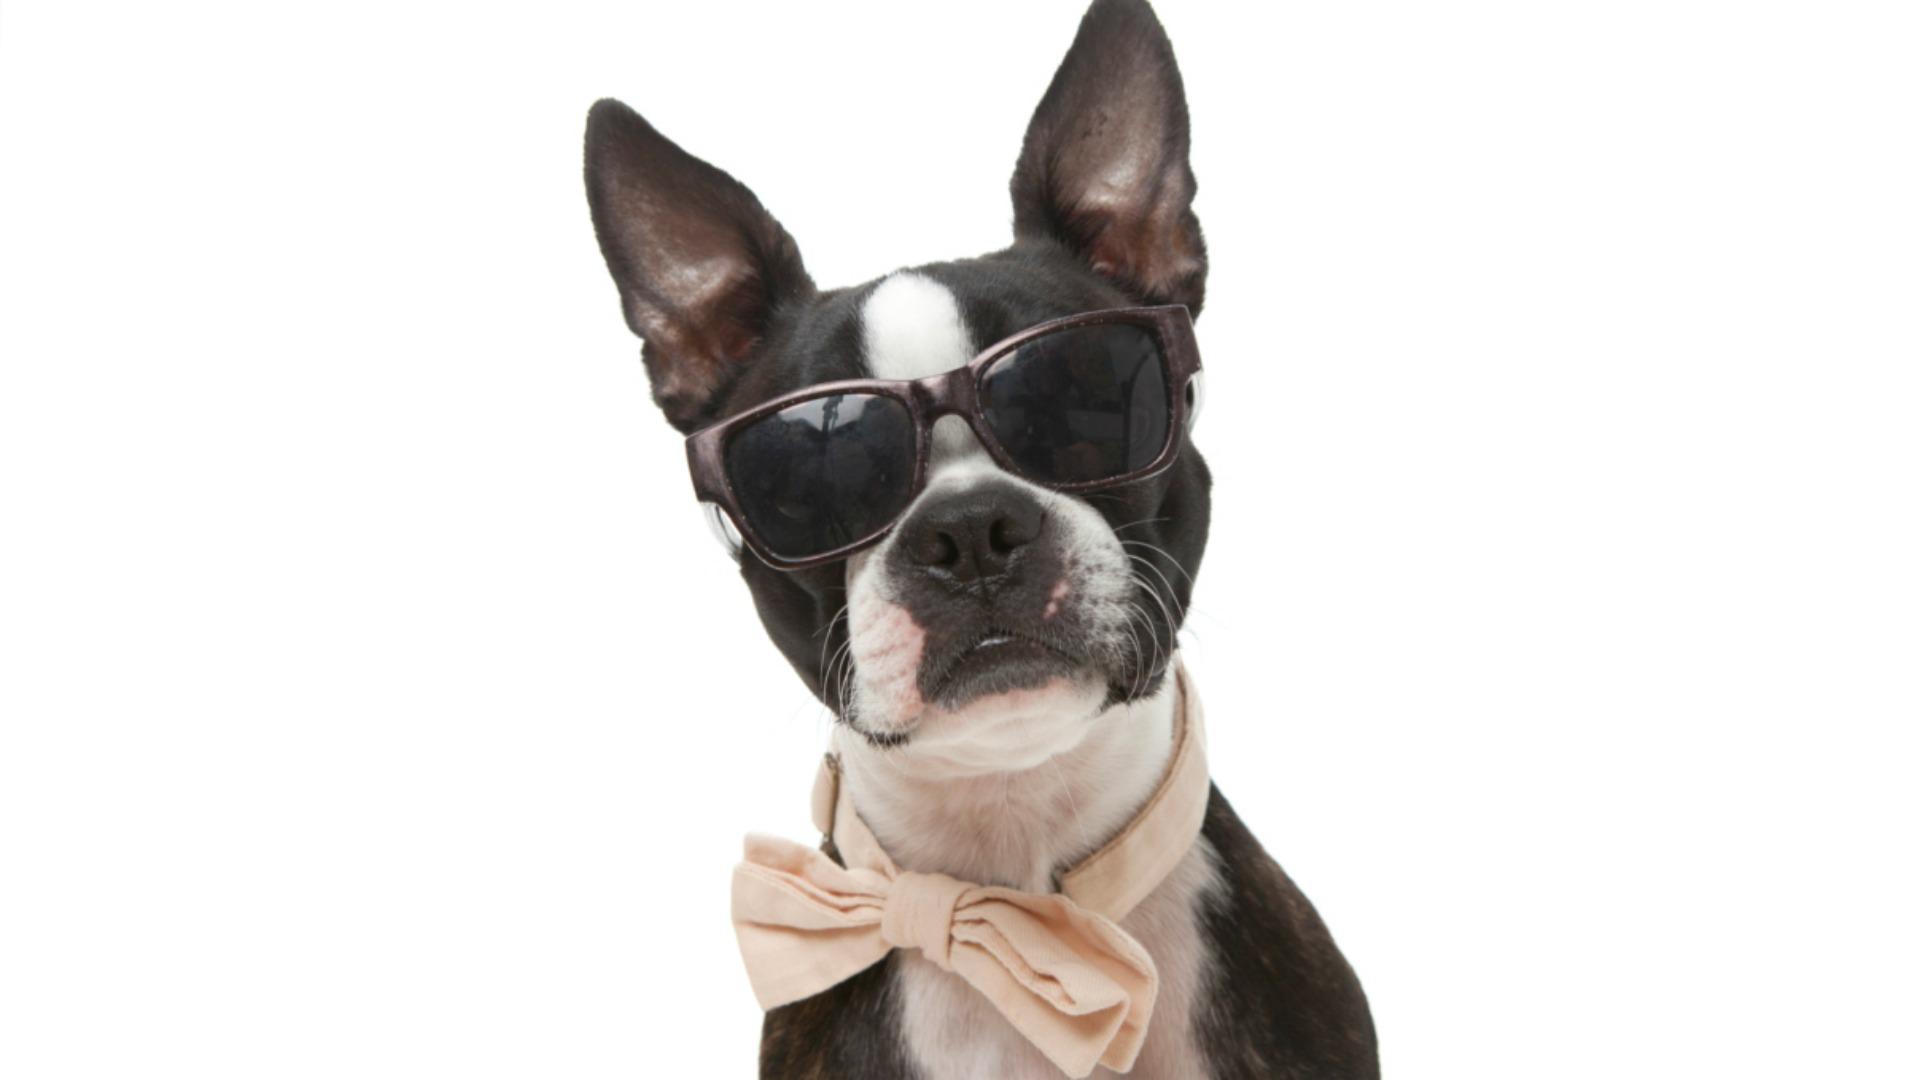 Dog with shades photo